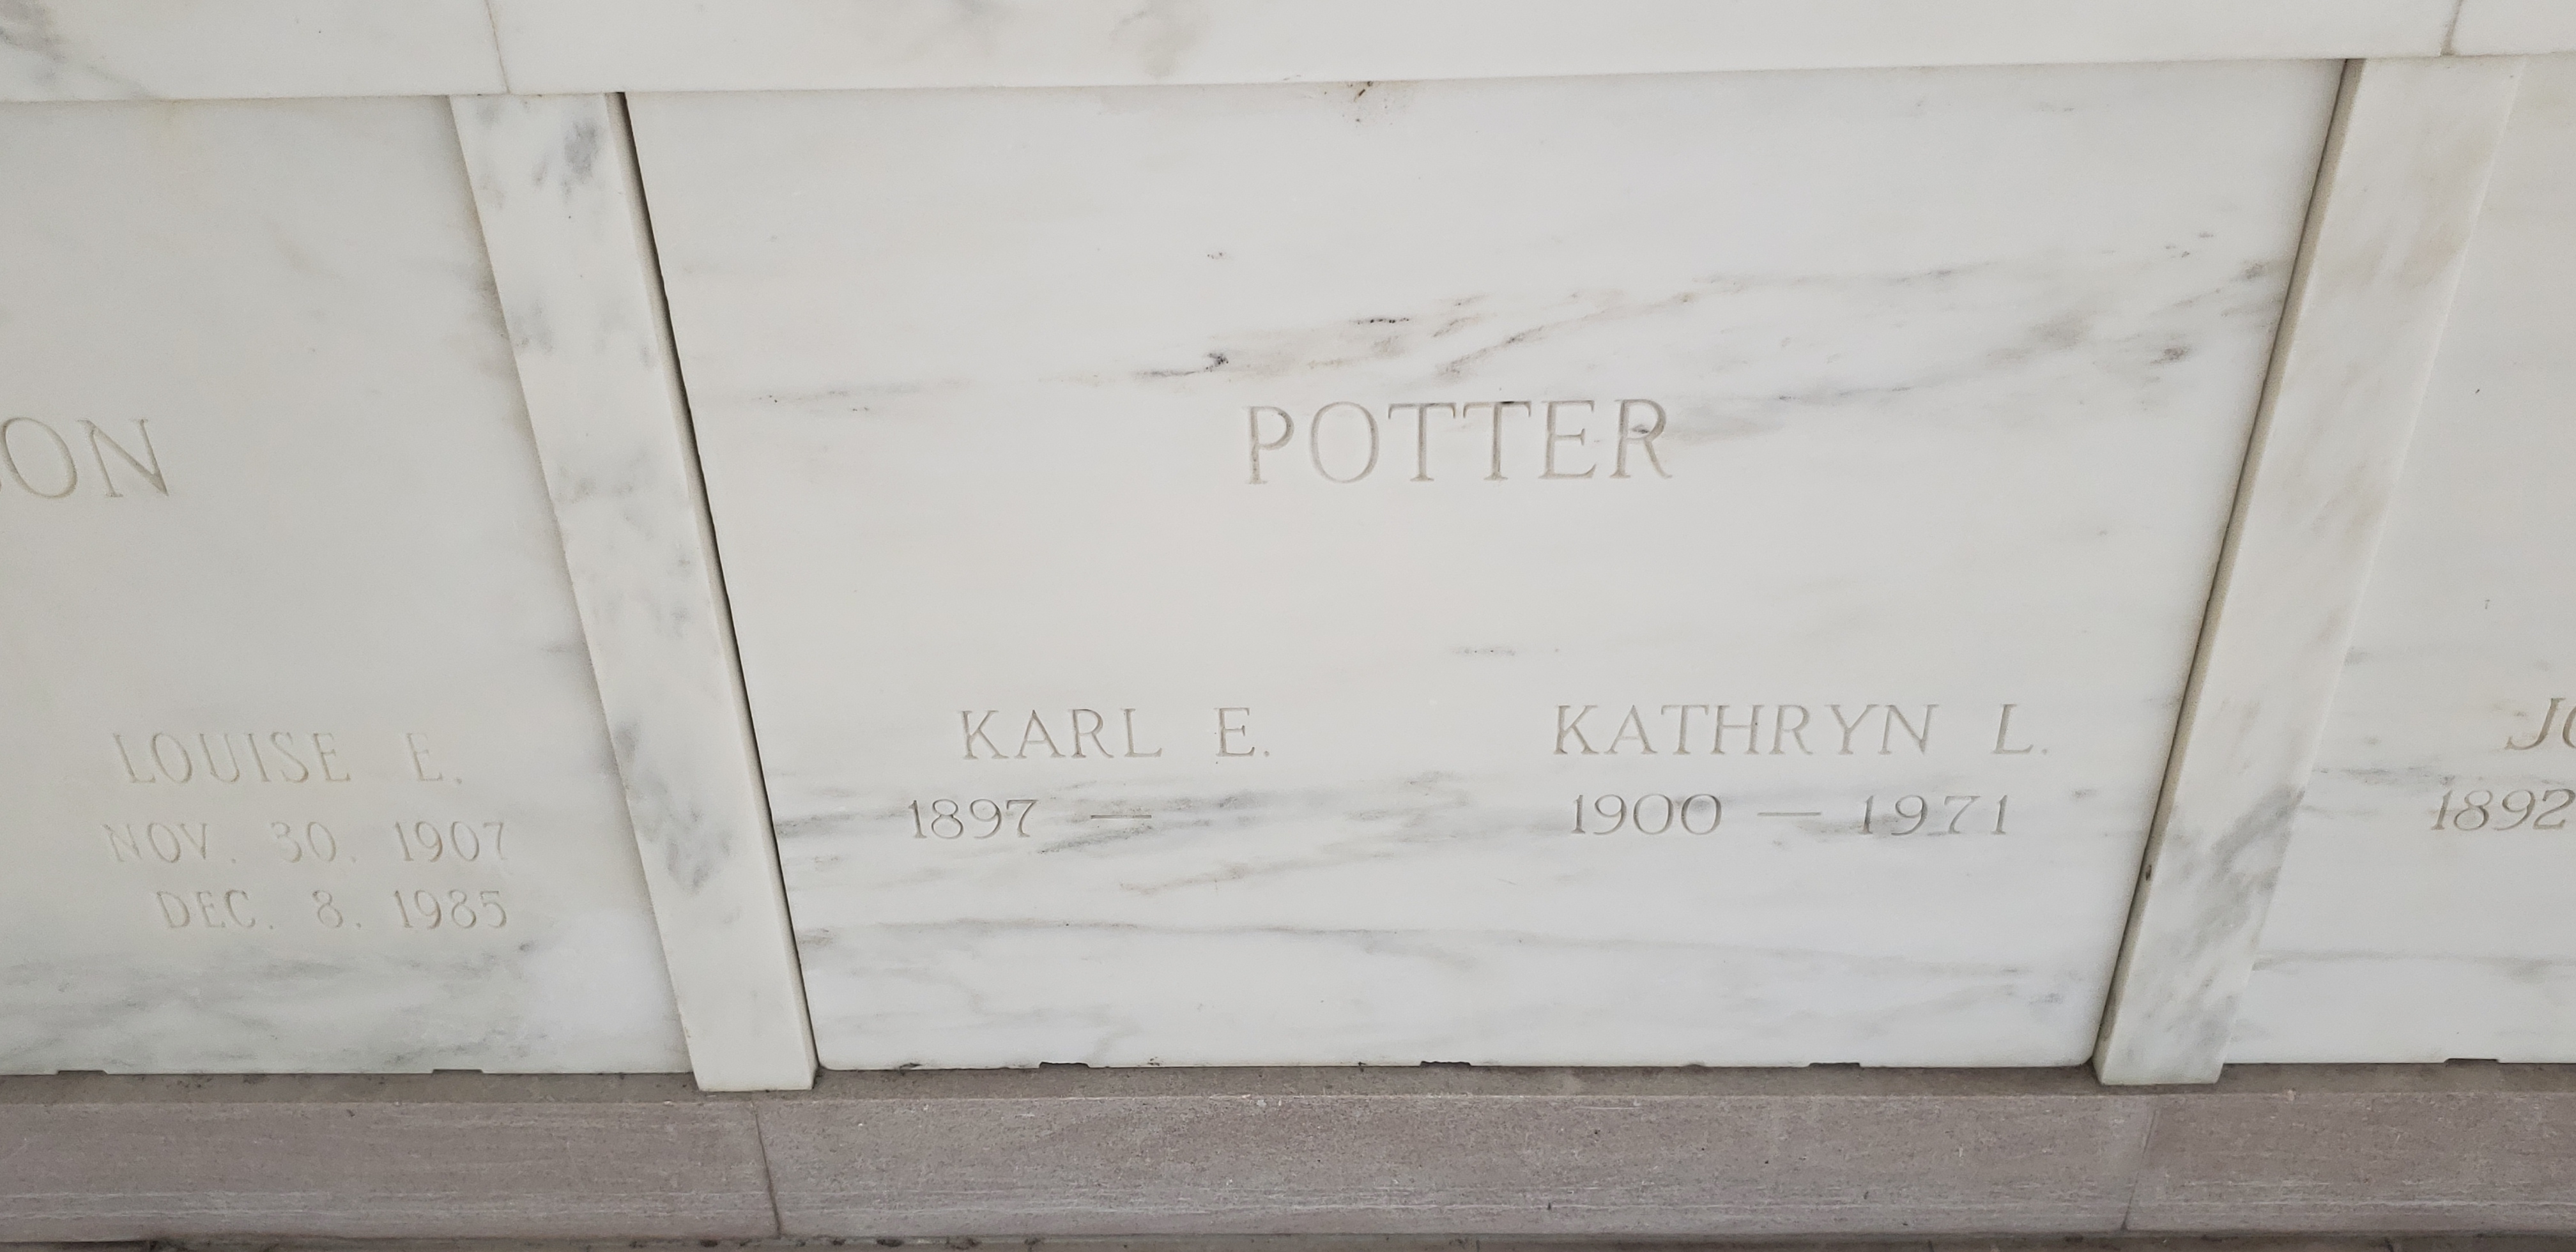 Kathryn L Potter